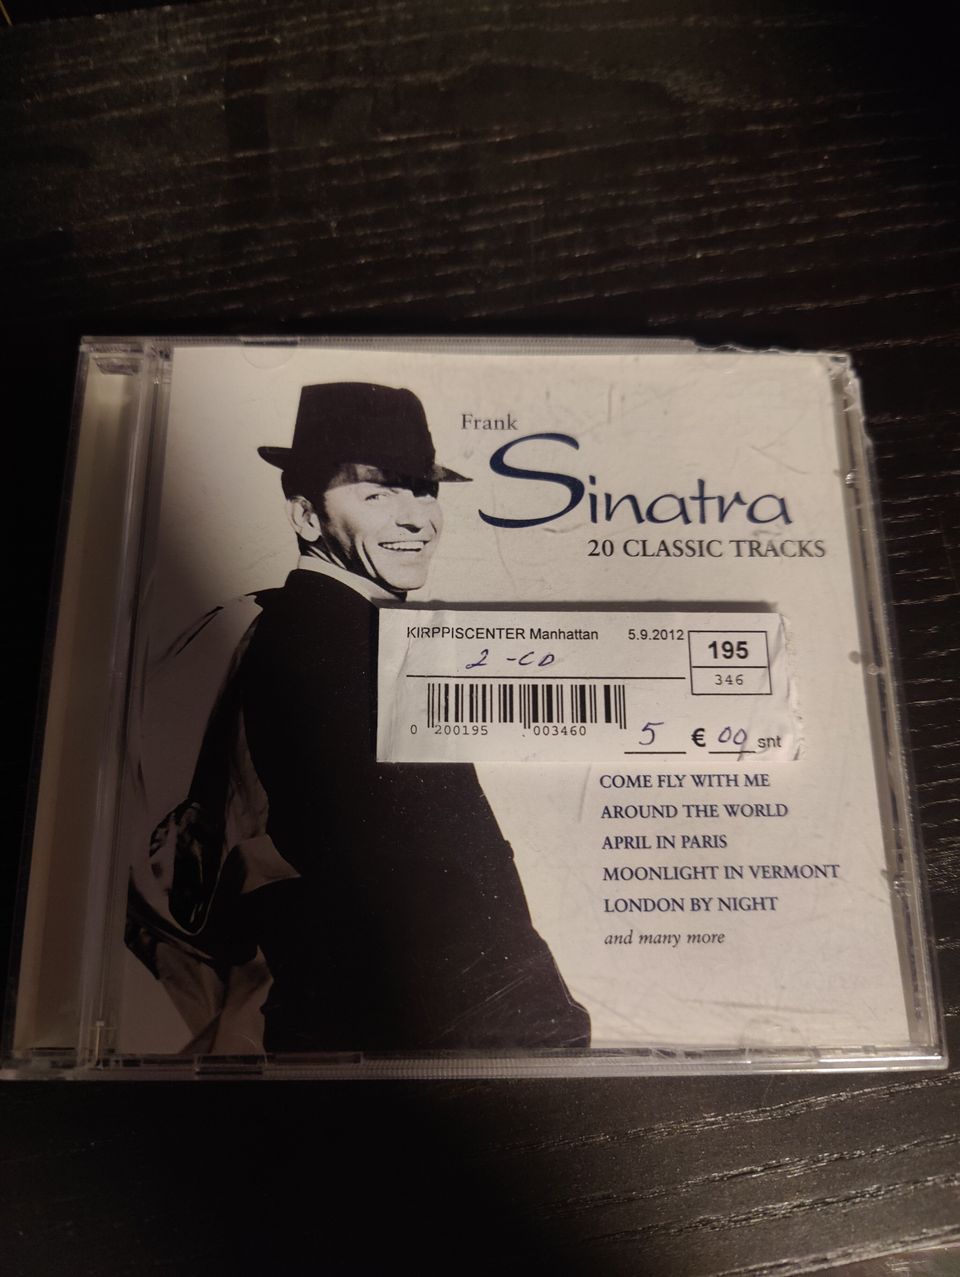 Frank Sinatra 20 classic tracks